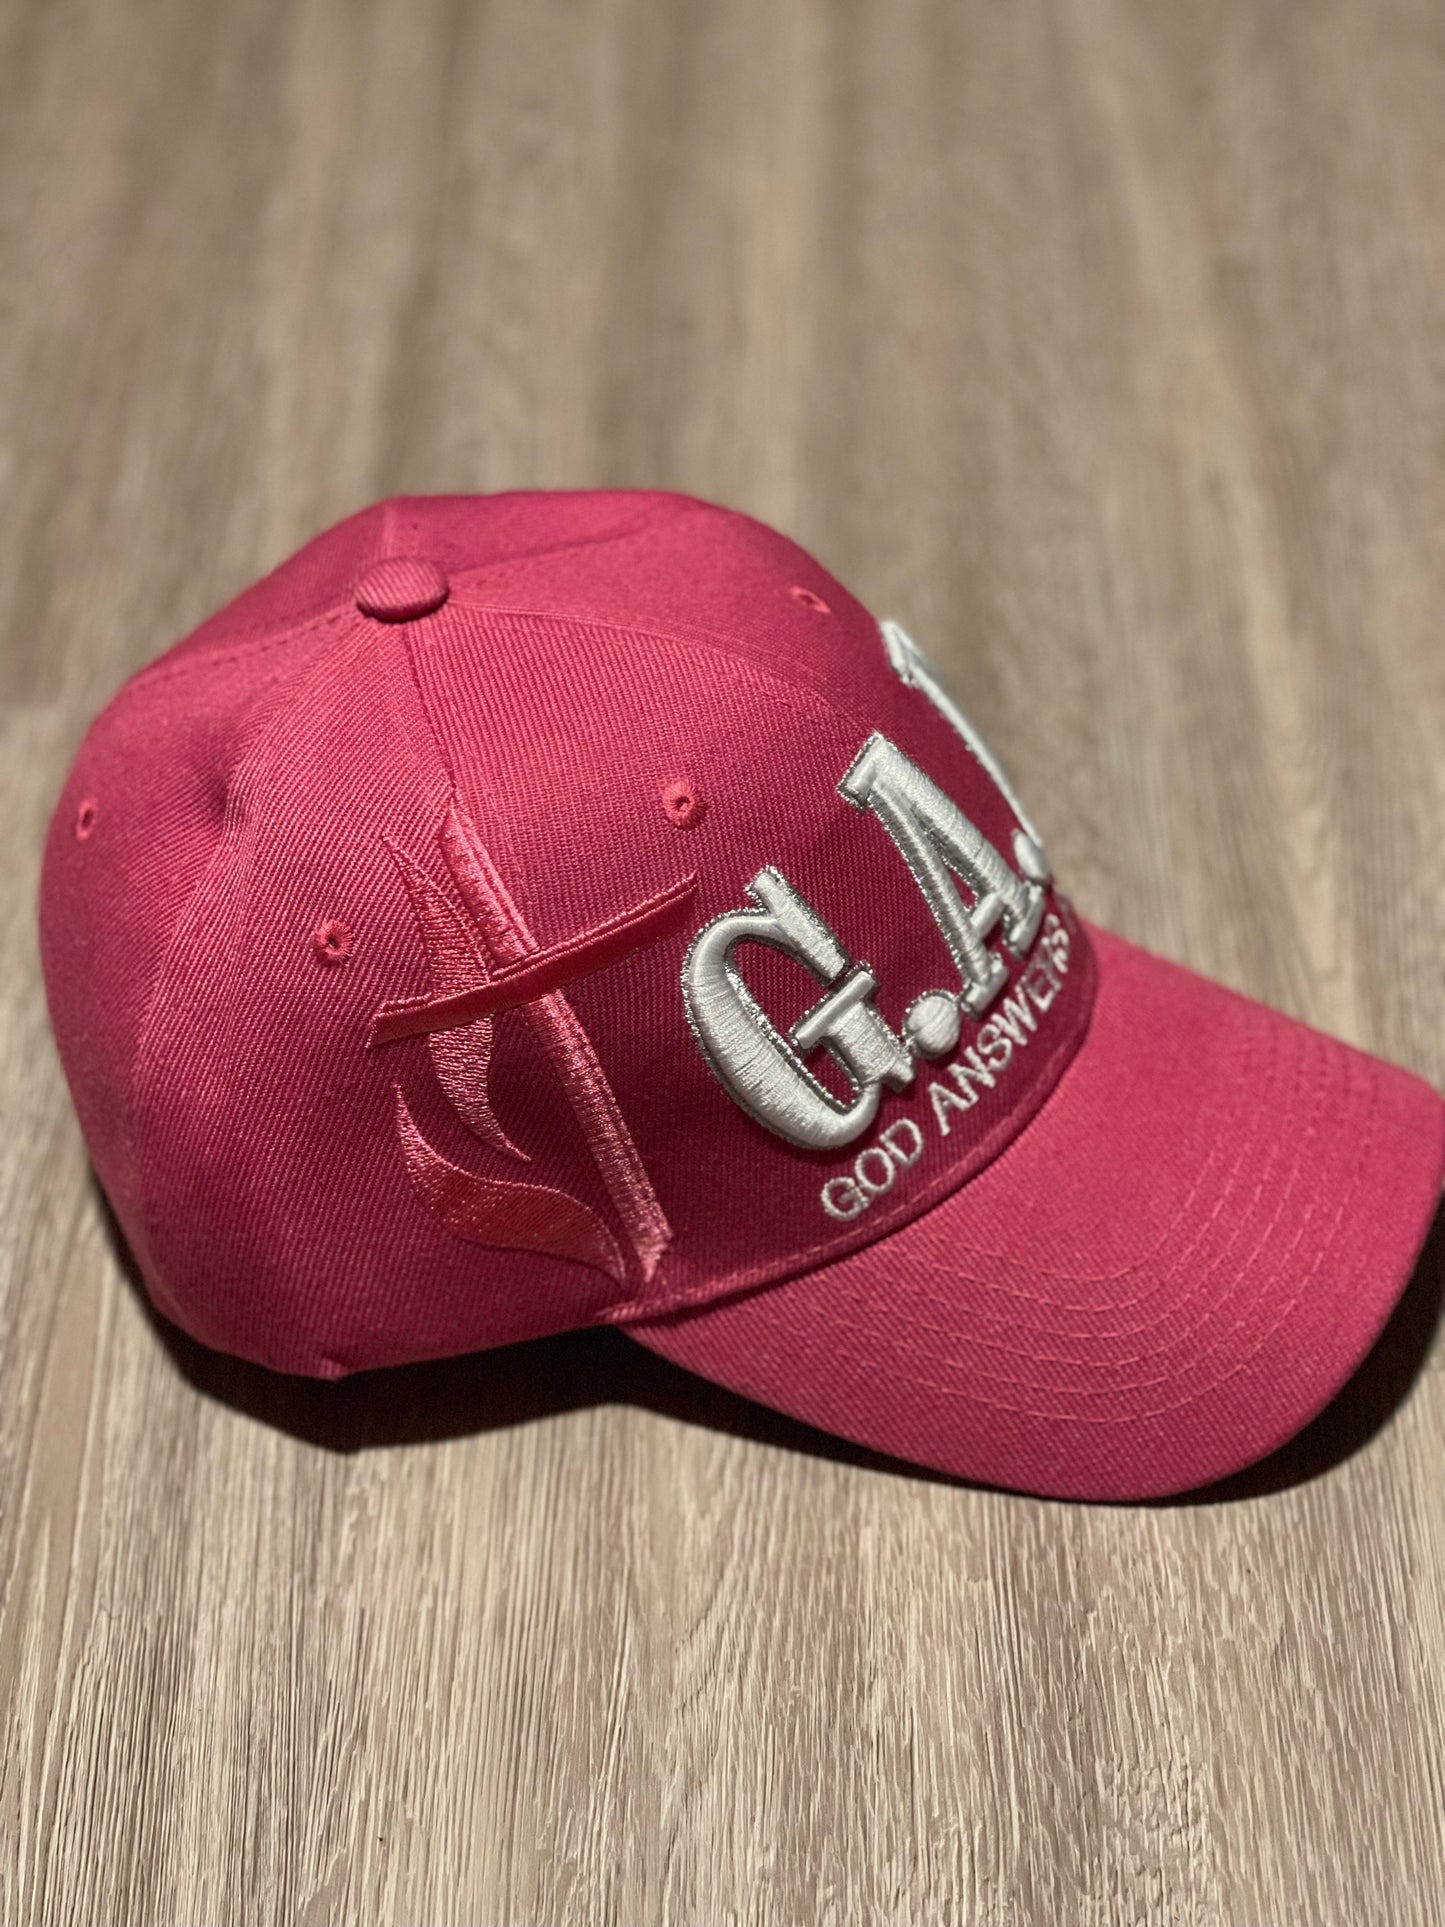 G.A.P. (God Answers Prayers) Baseball Cap - Pink